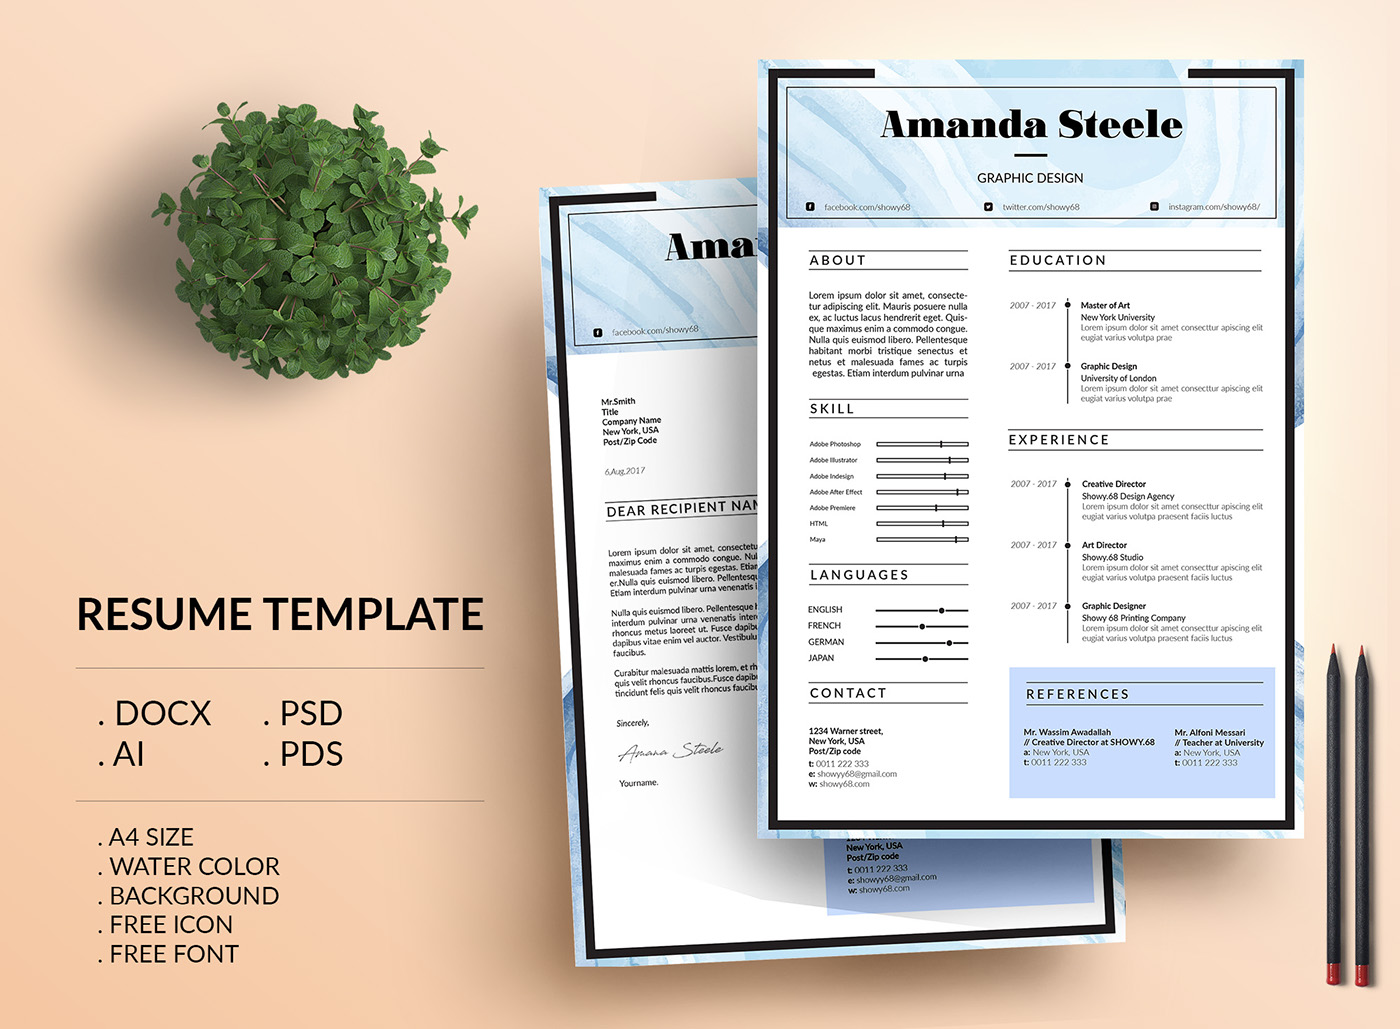 CV CV template Resume resume template water color free icon Free font Professinal job application branding 